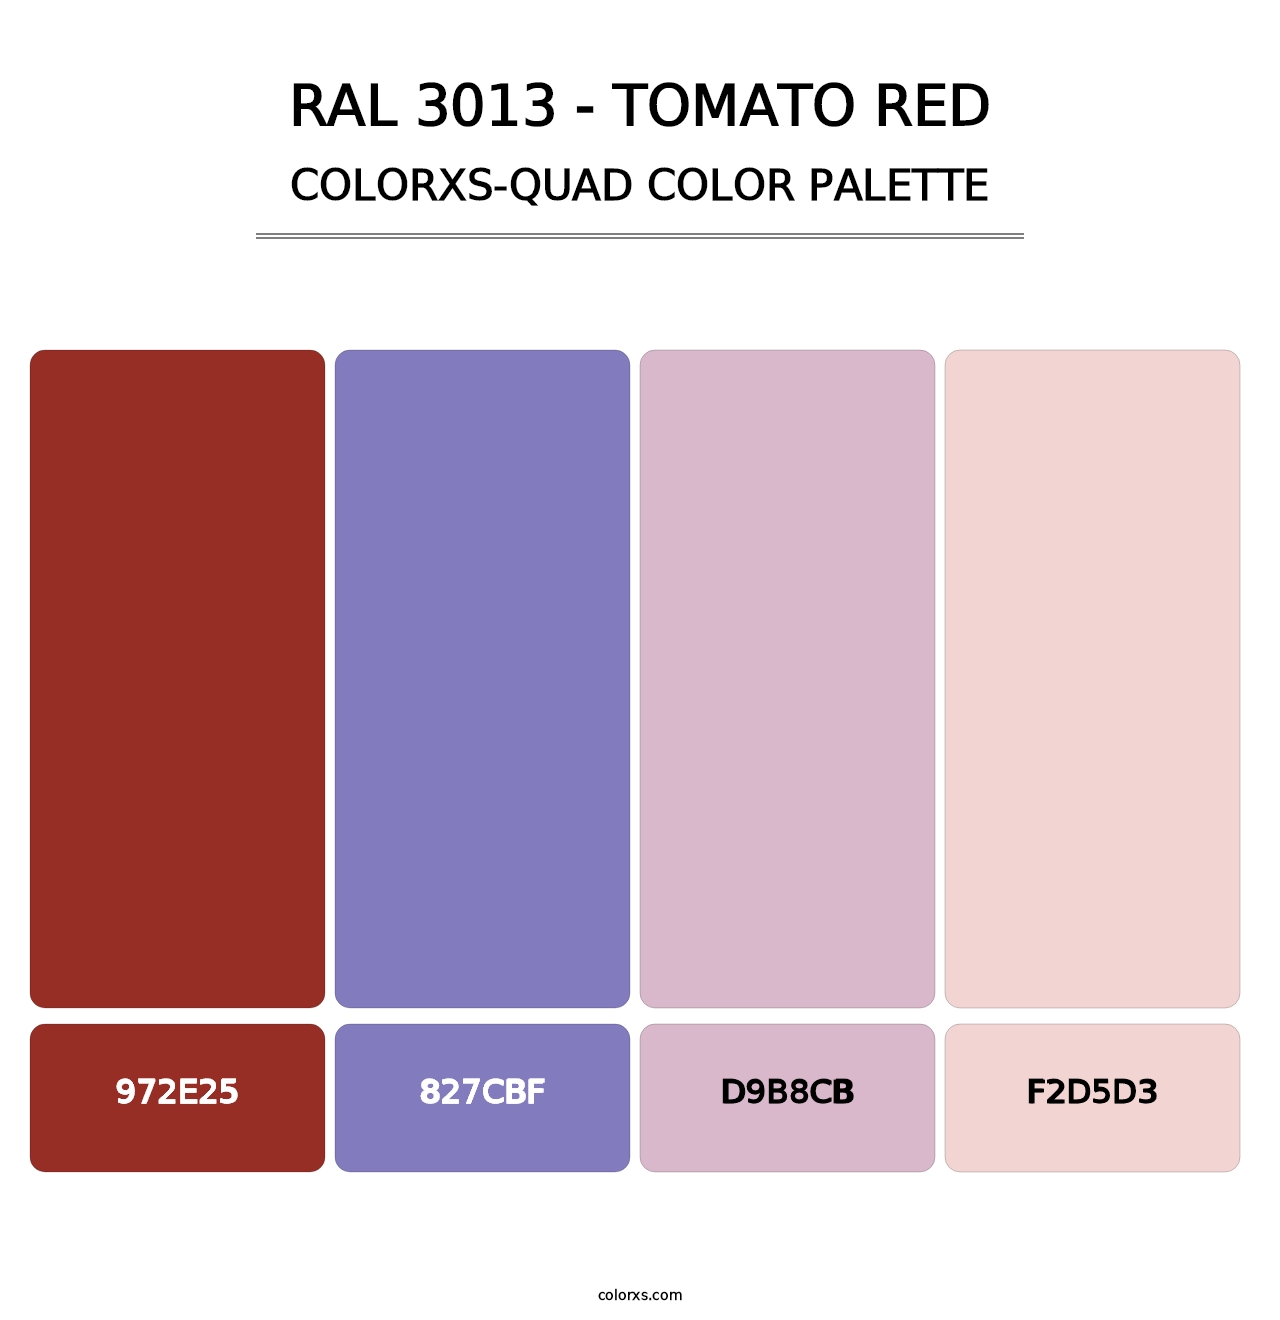 RAL 3013 - Tomato Red - Colorxs Quad Palette